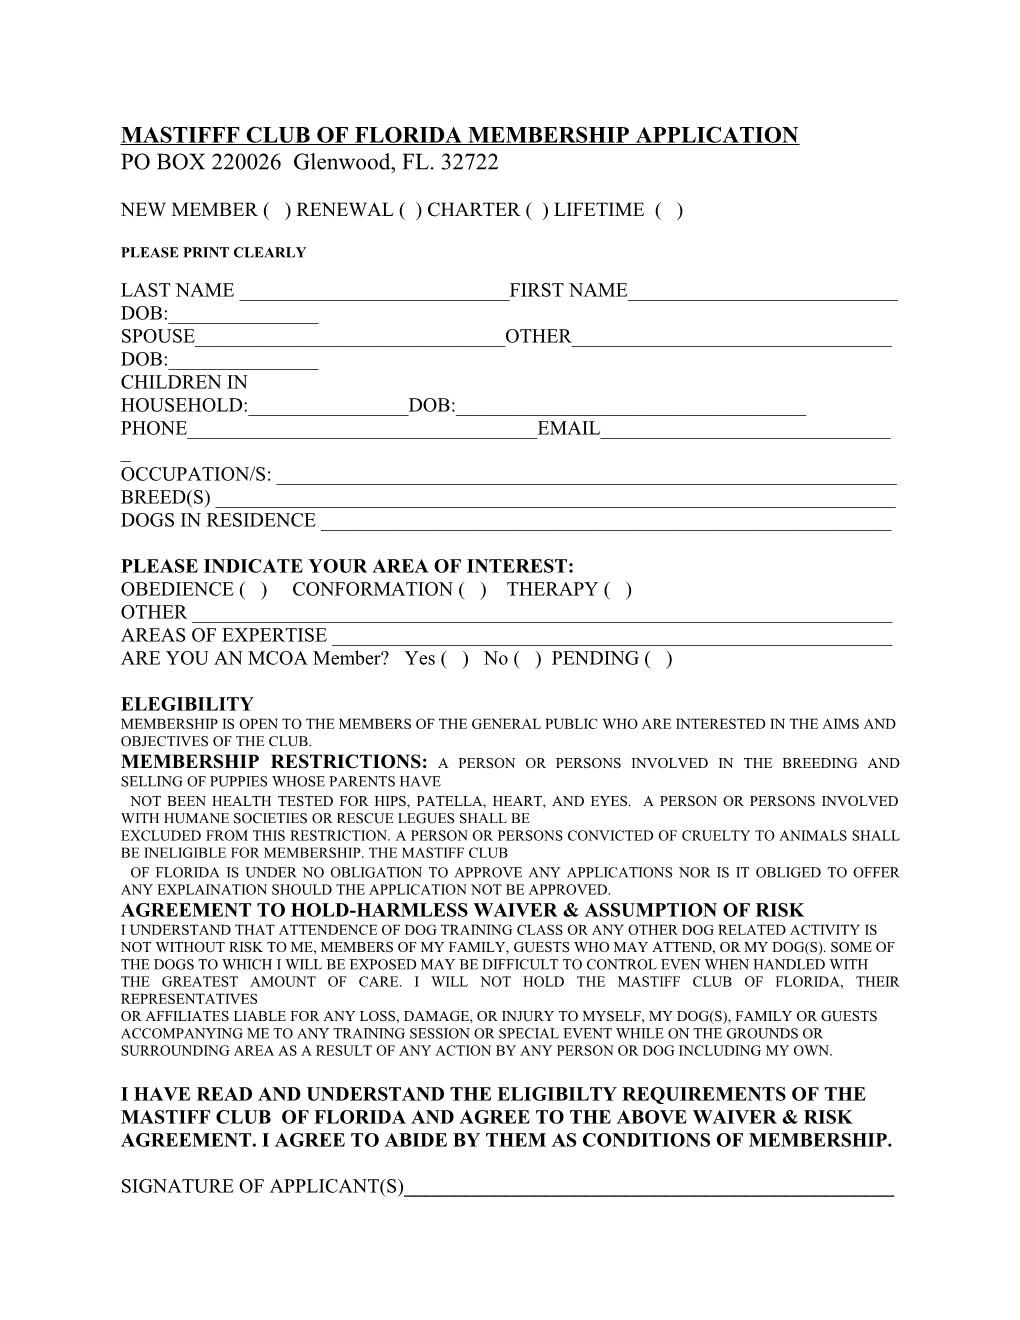 Mastifff Club of Florida Membership Application